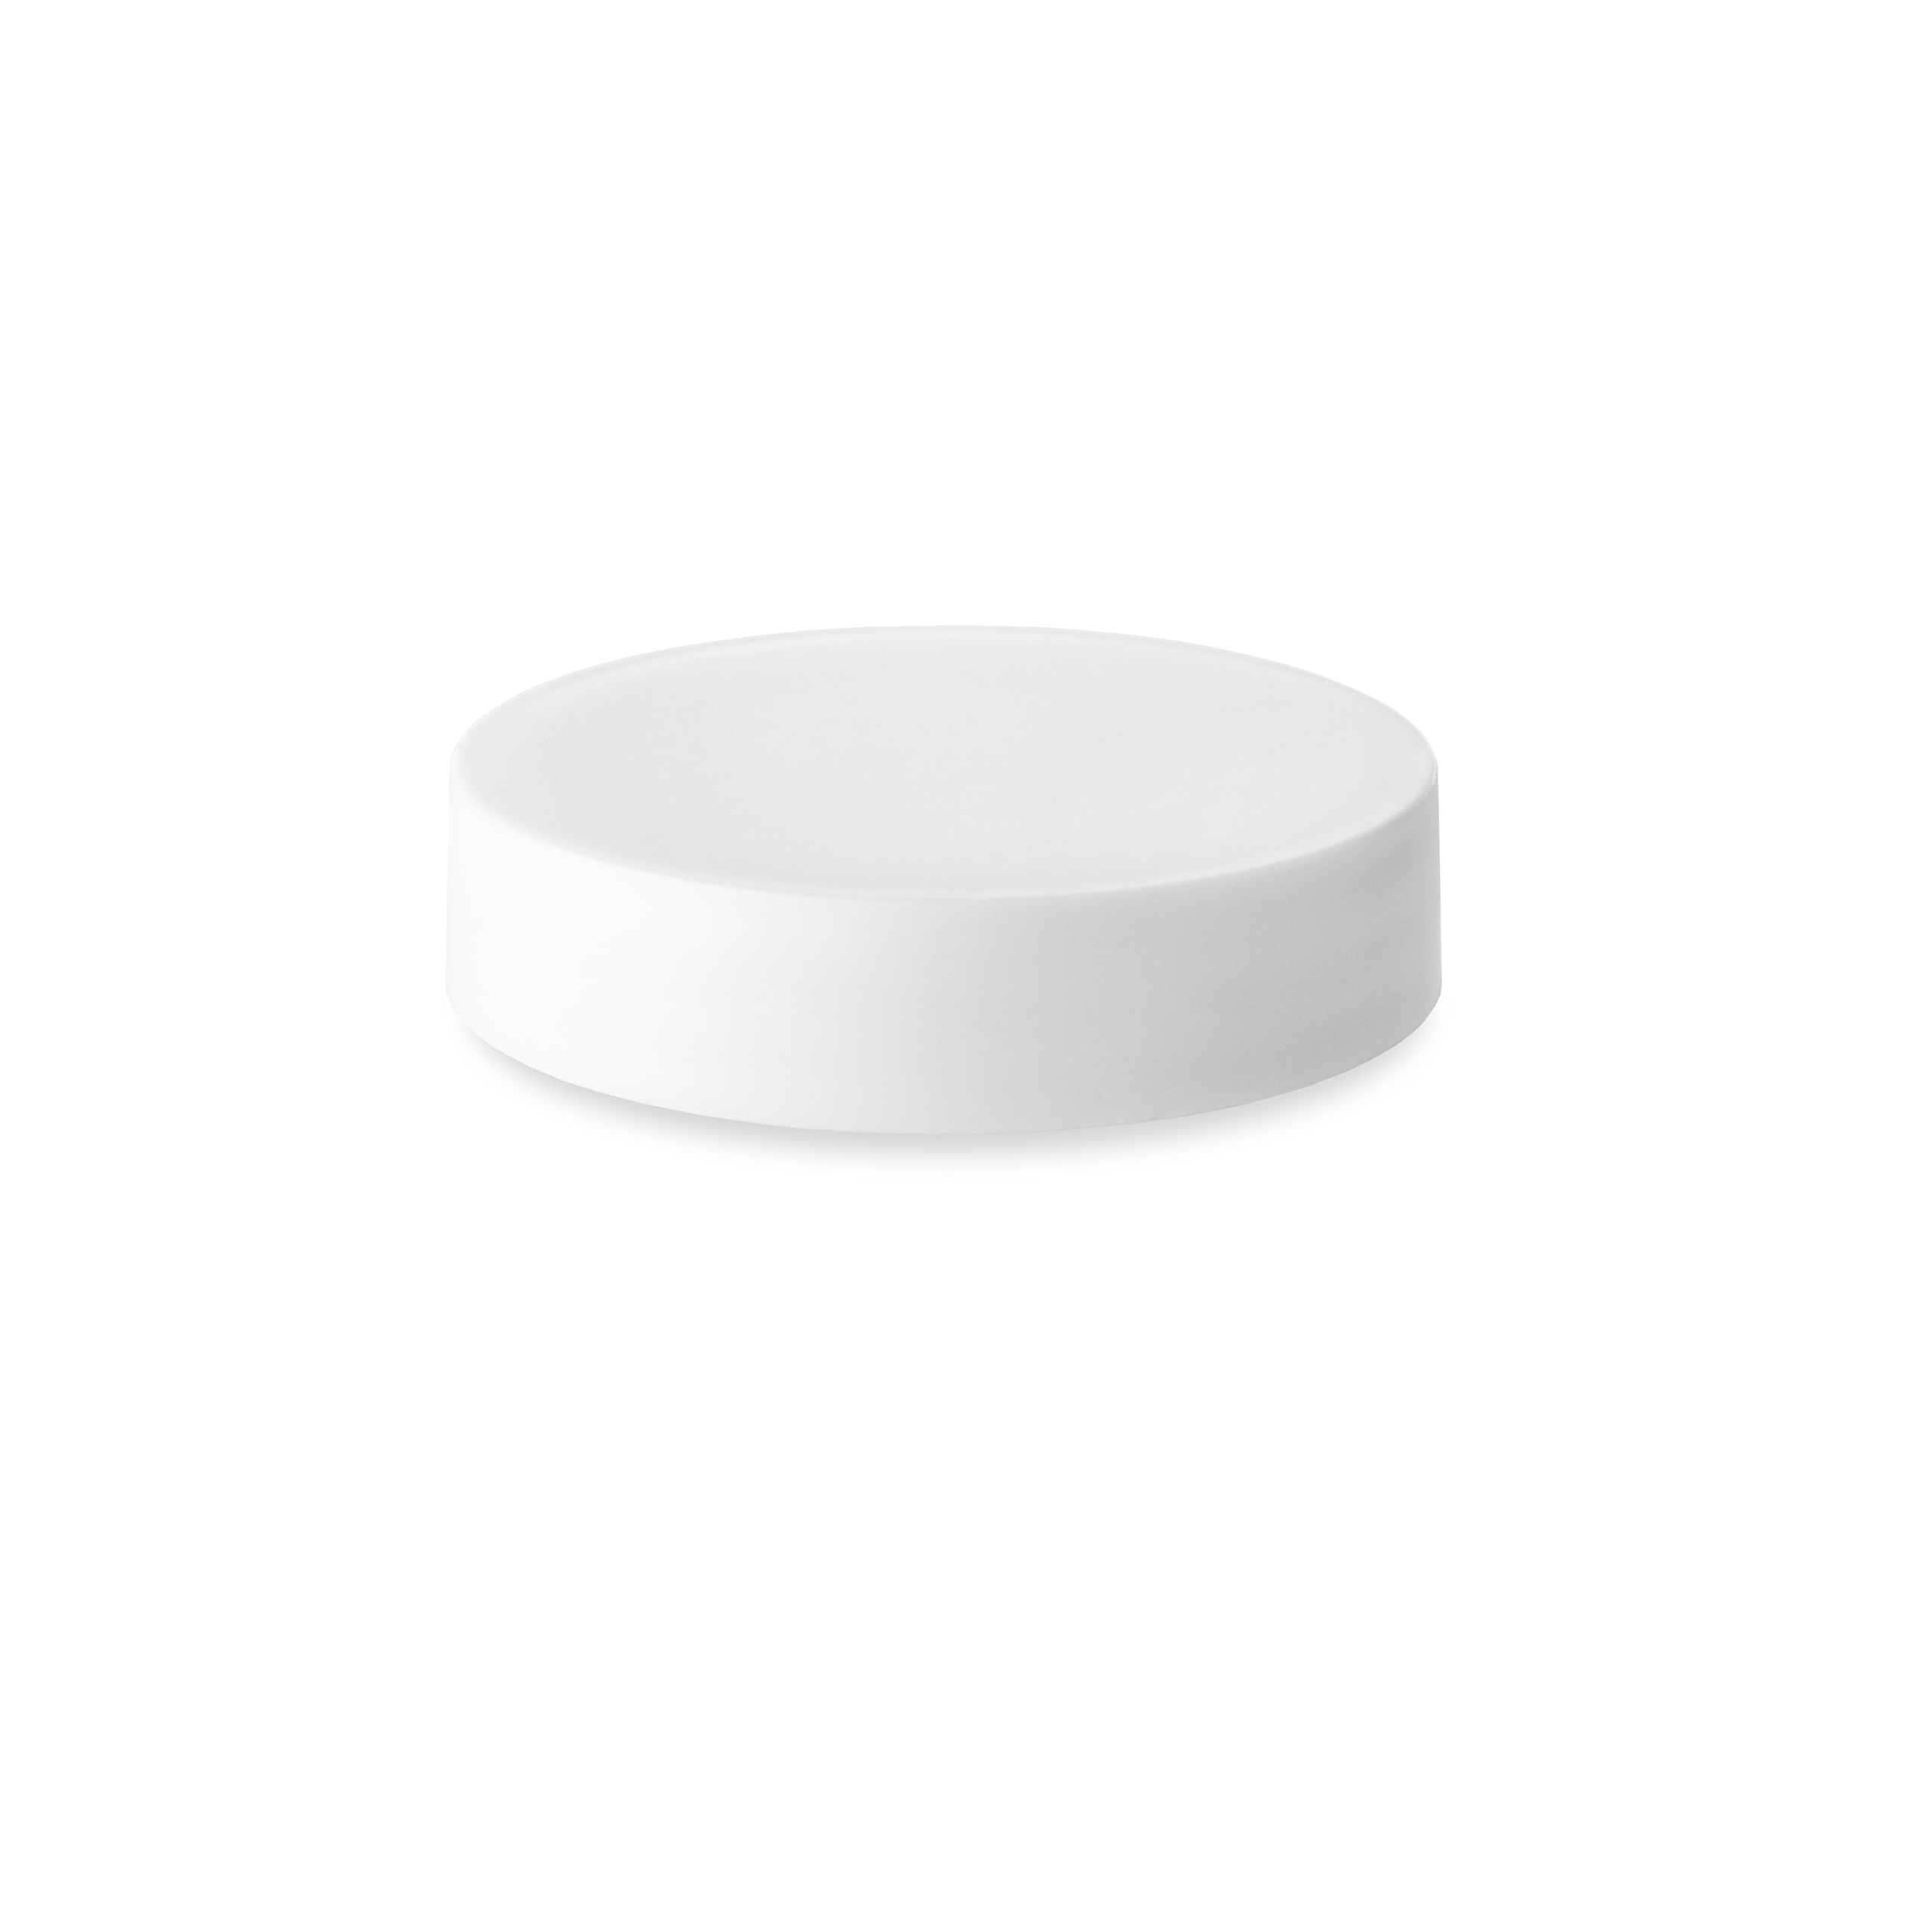 White 58/400 polypropylene lid from Embalforme